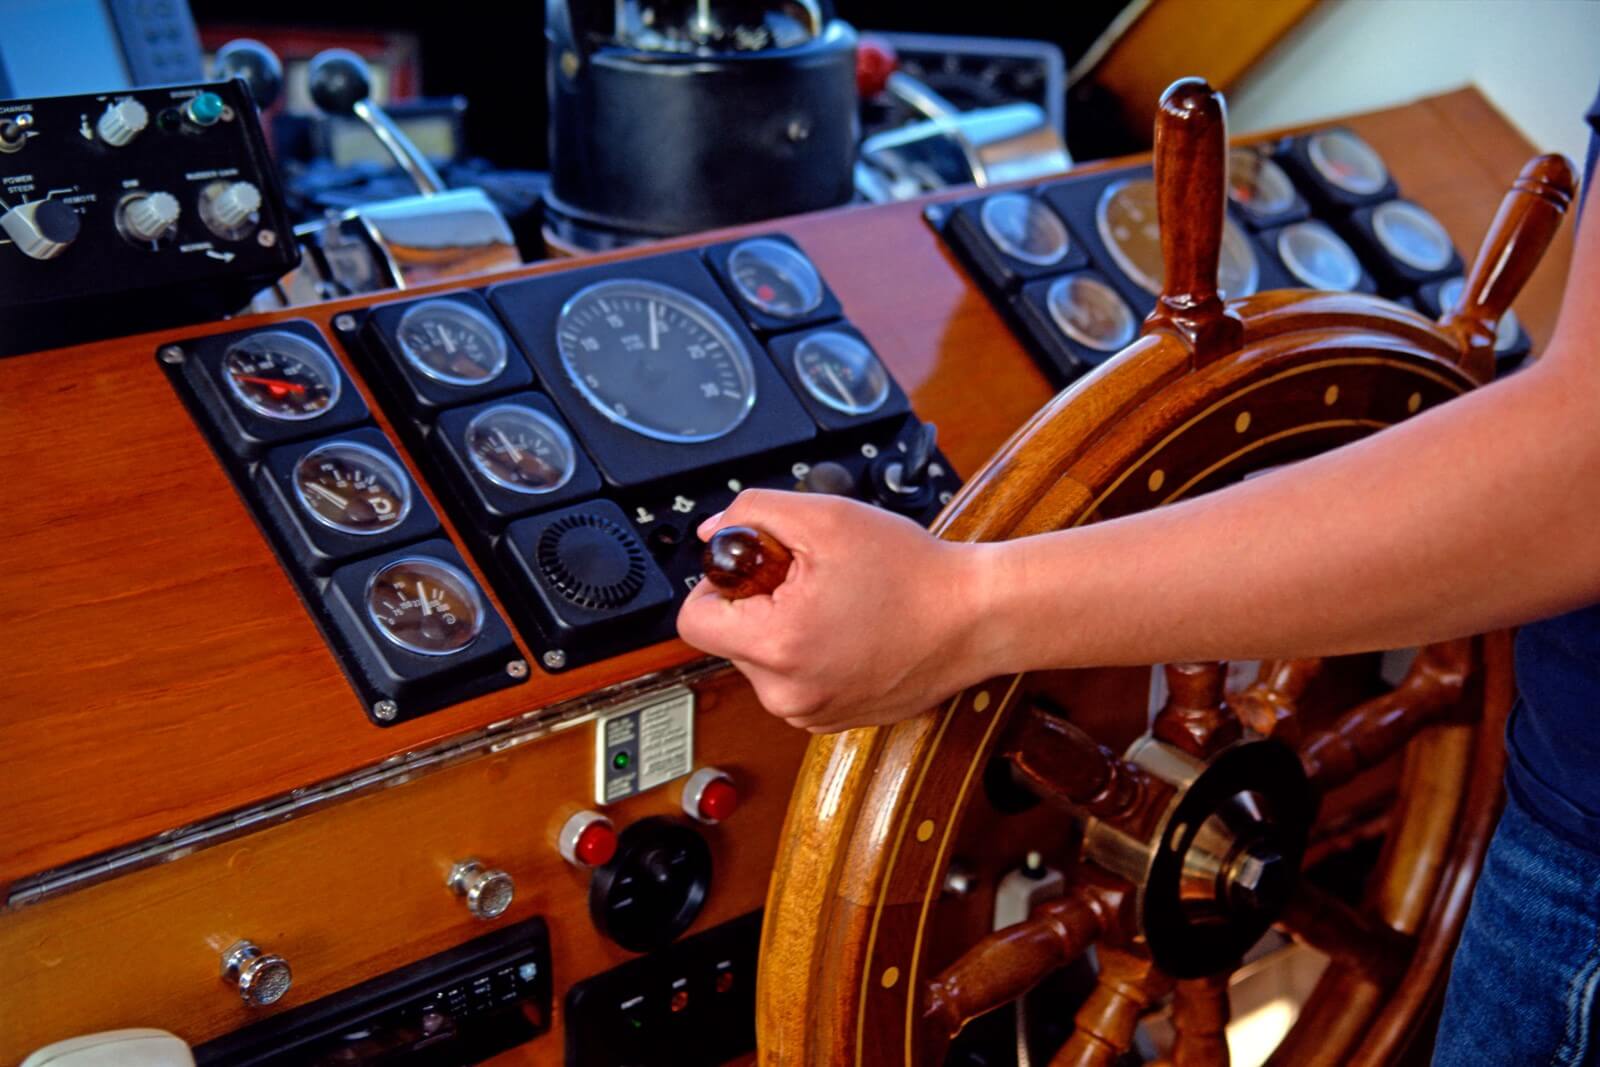 A ships main control panel